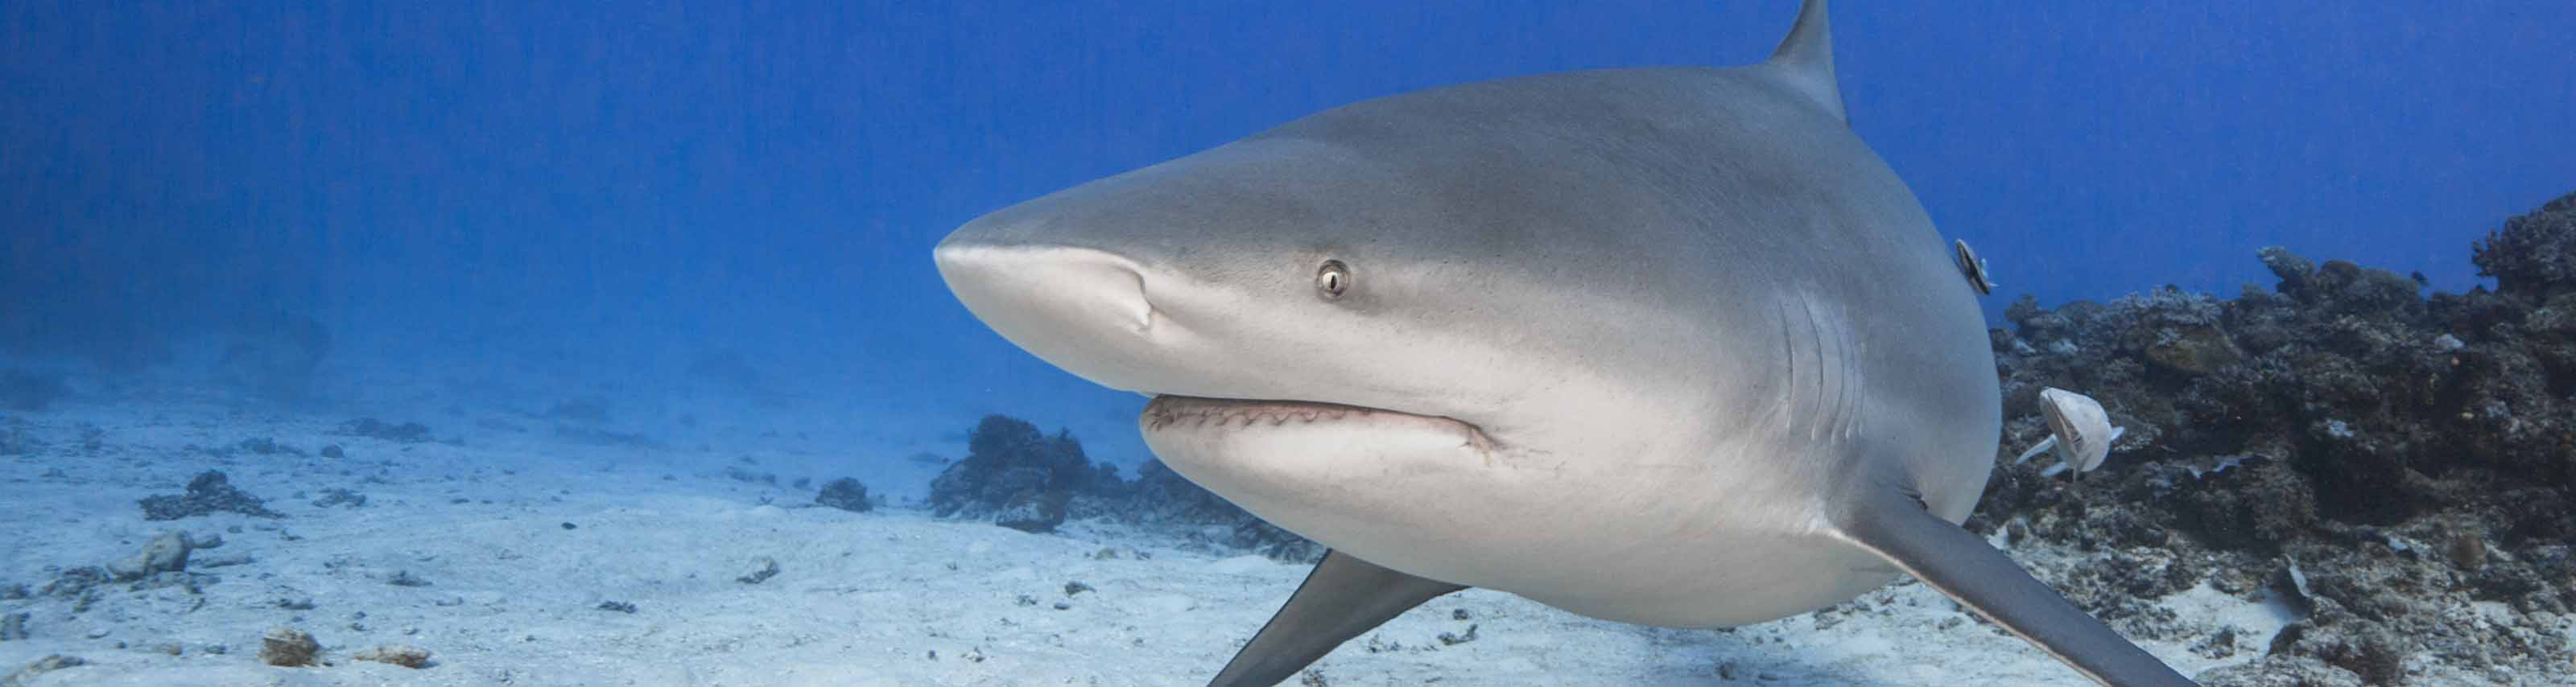 Awakening shark dive t v a lowres